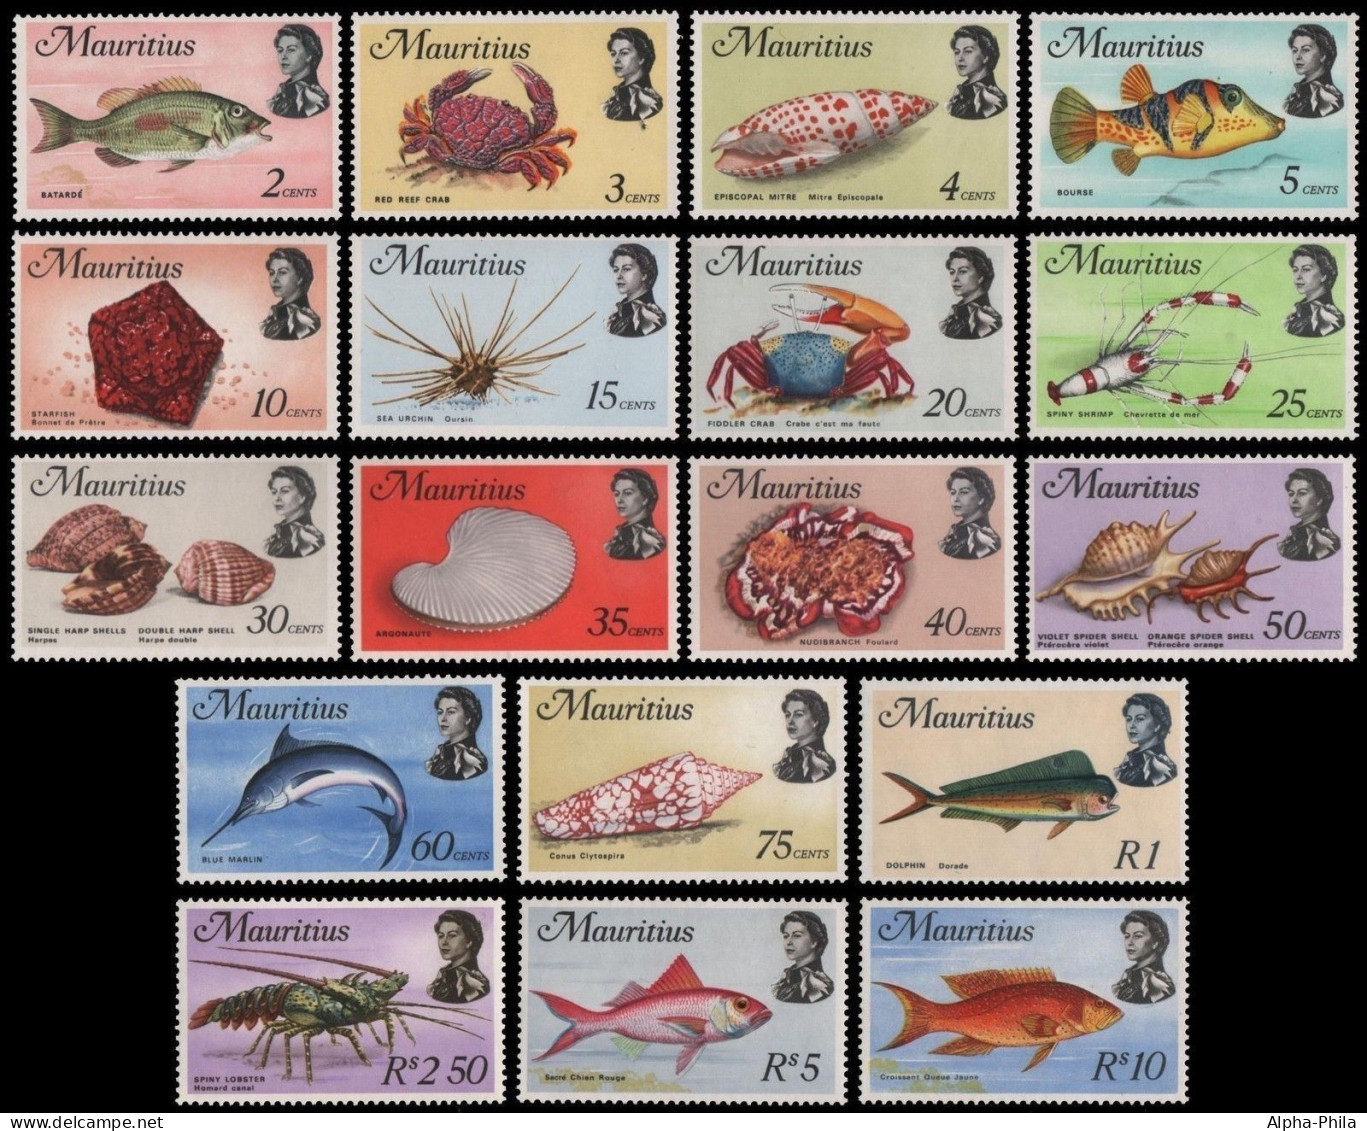 Mauritius 1969 - Mi-Nr. 331-348 ** - MNH - Fische / Fish - Mauritius (1968-...)